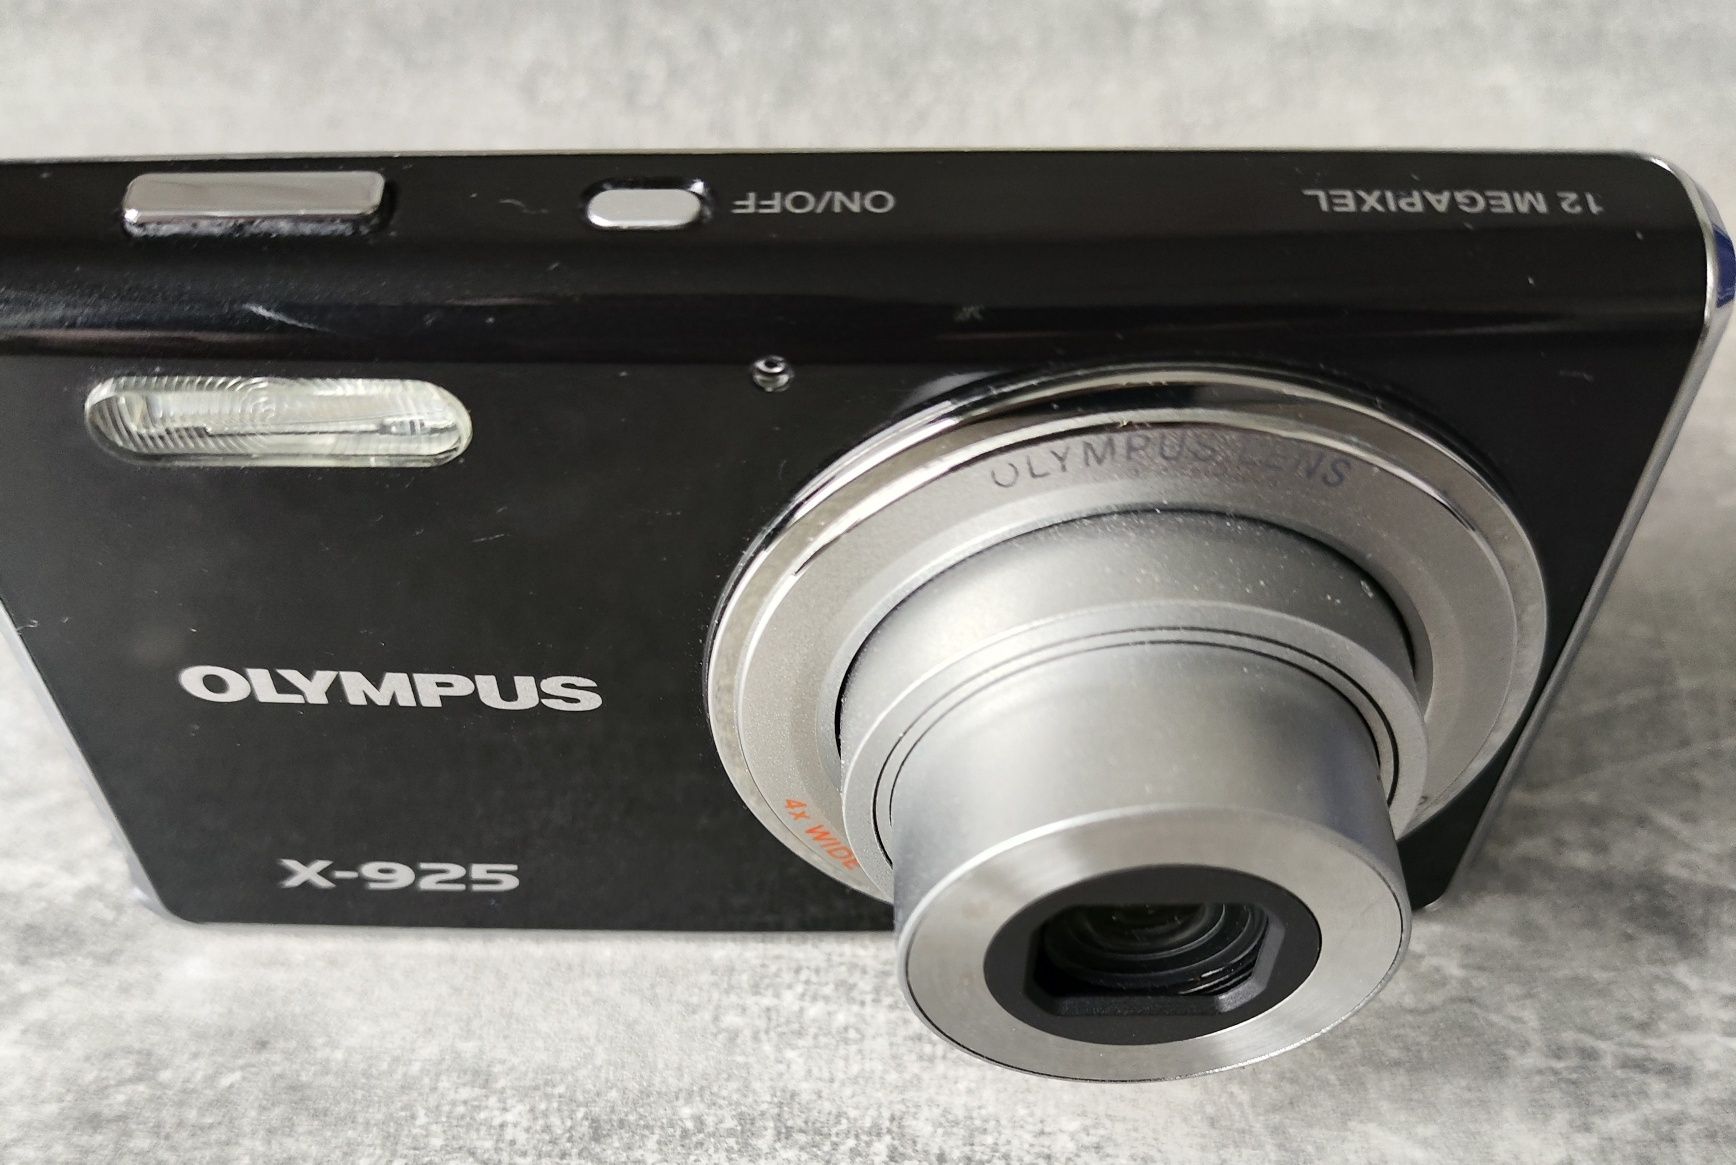 Продам цифровую фотокамеру Olympus  FE-4000/X-925